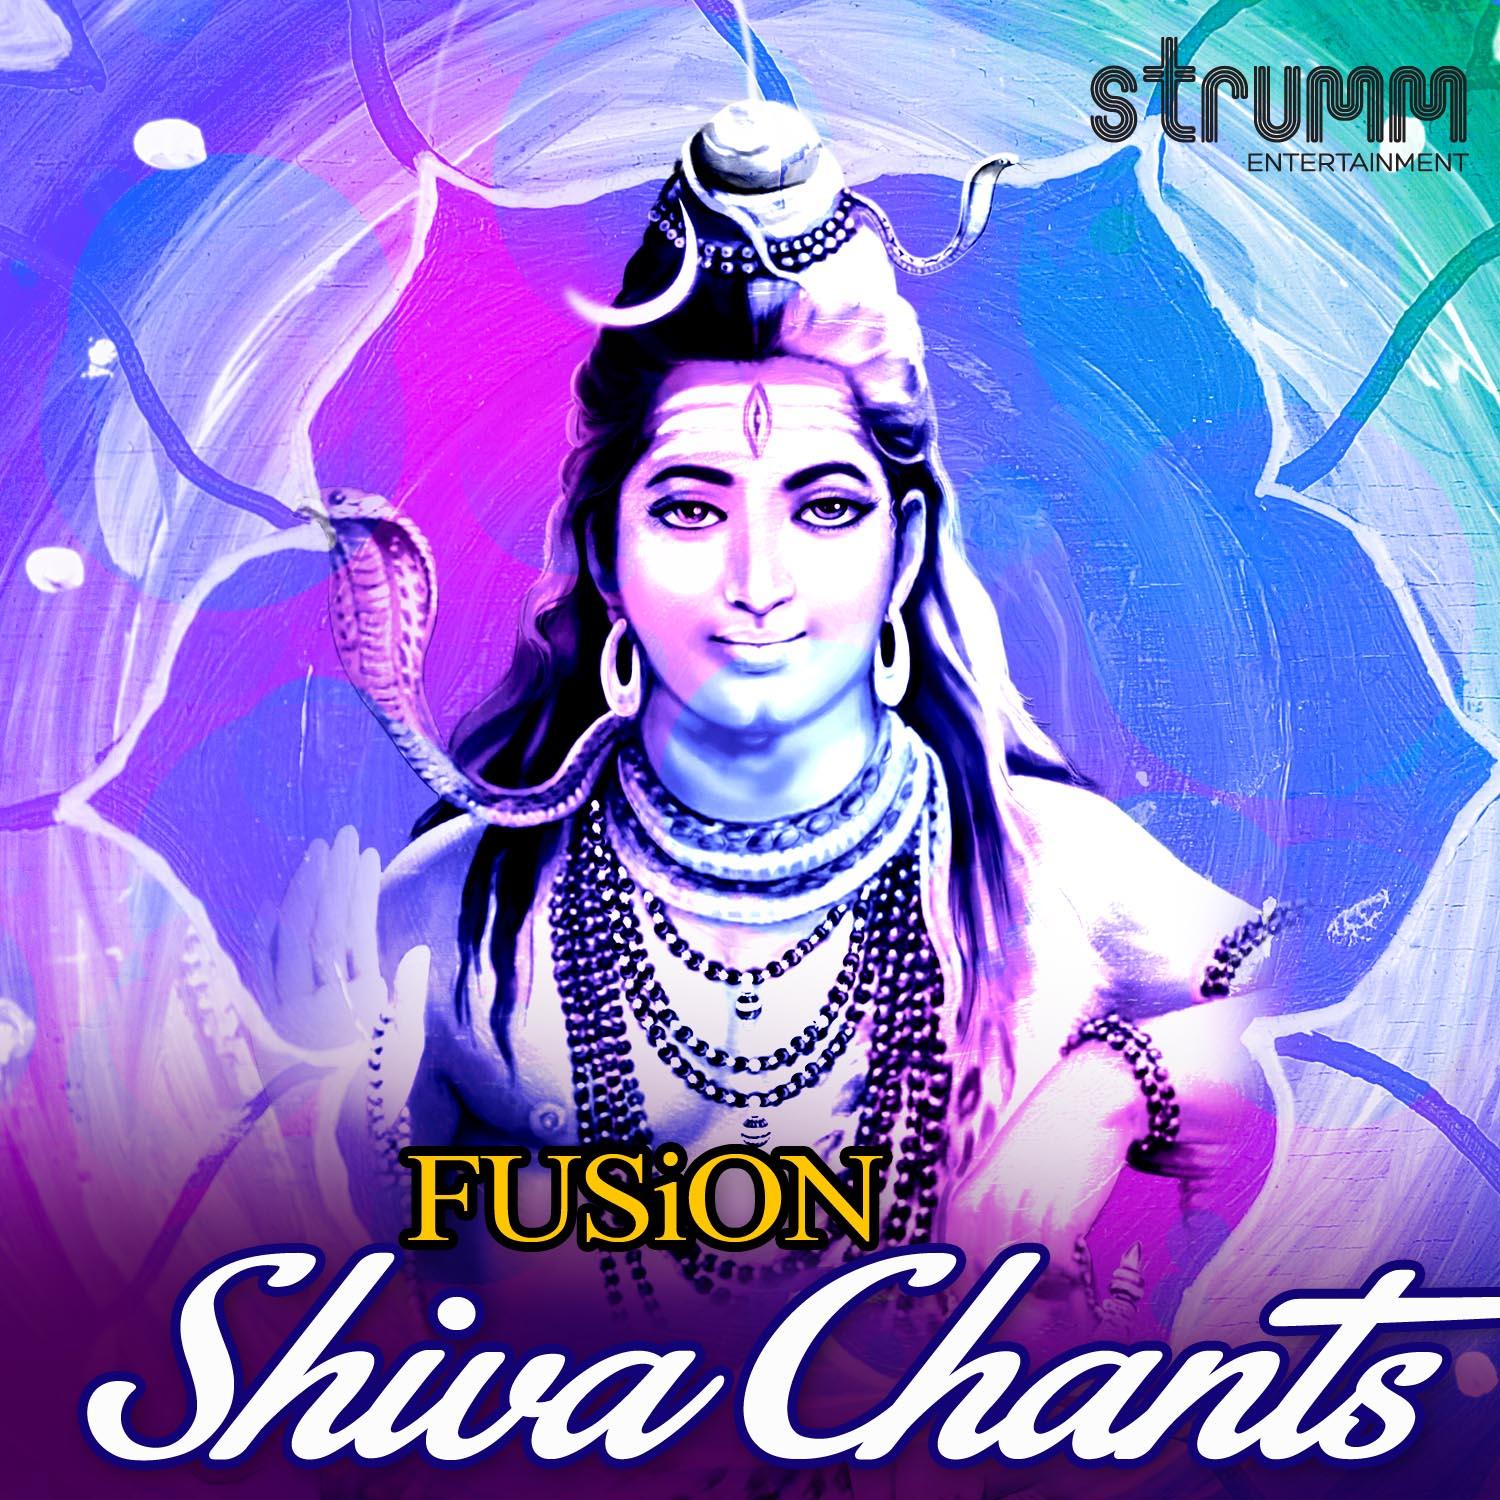 Fusion Shiva Chants